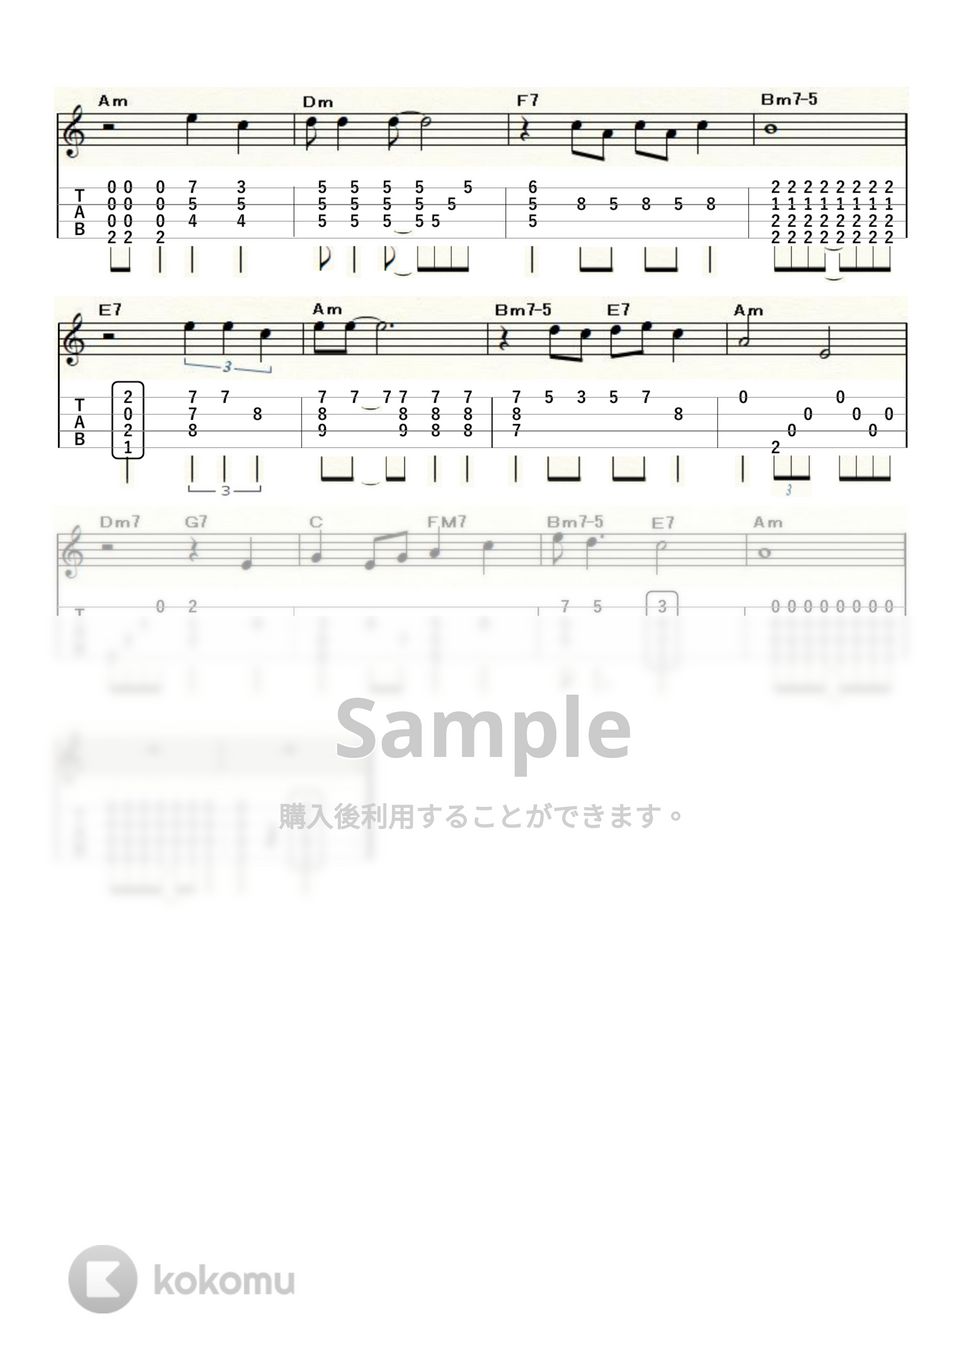 G.ガーシュイン - サマータイム (Low-G) by ukulelepapa